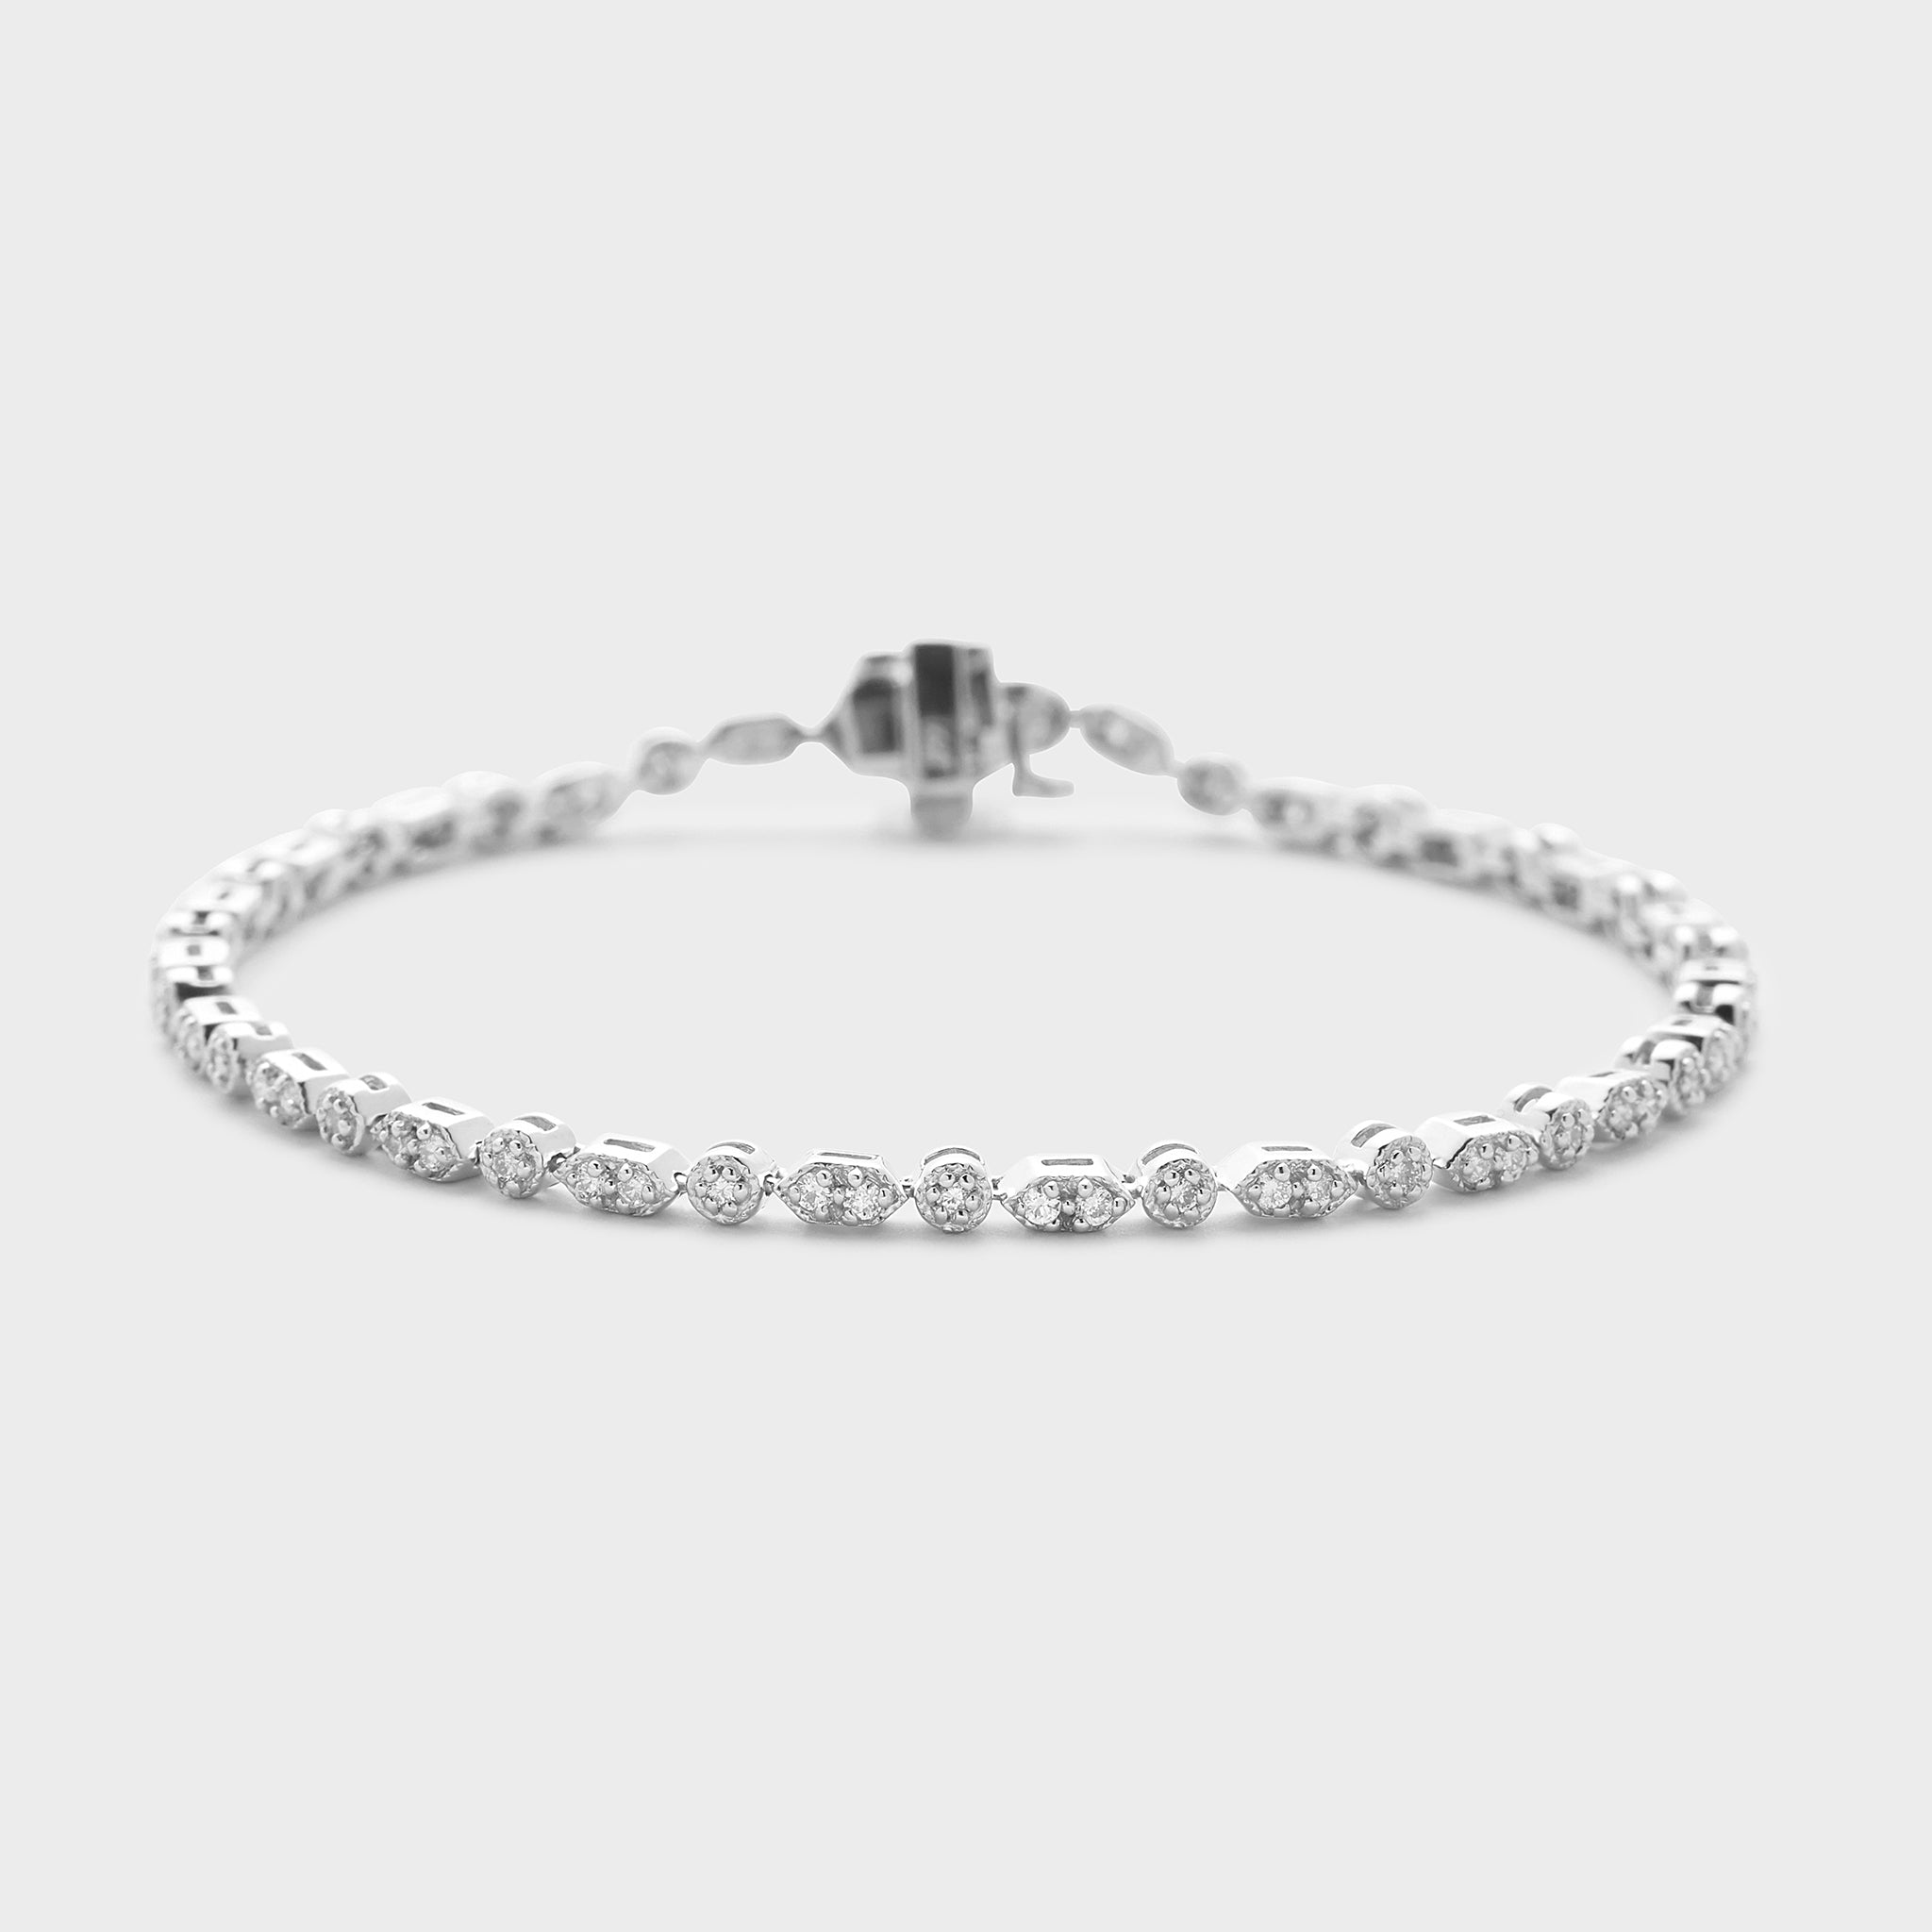 Antique Style Diamond Bracelet - The Clear Cut Collection